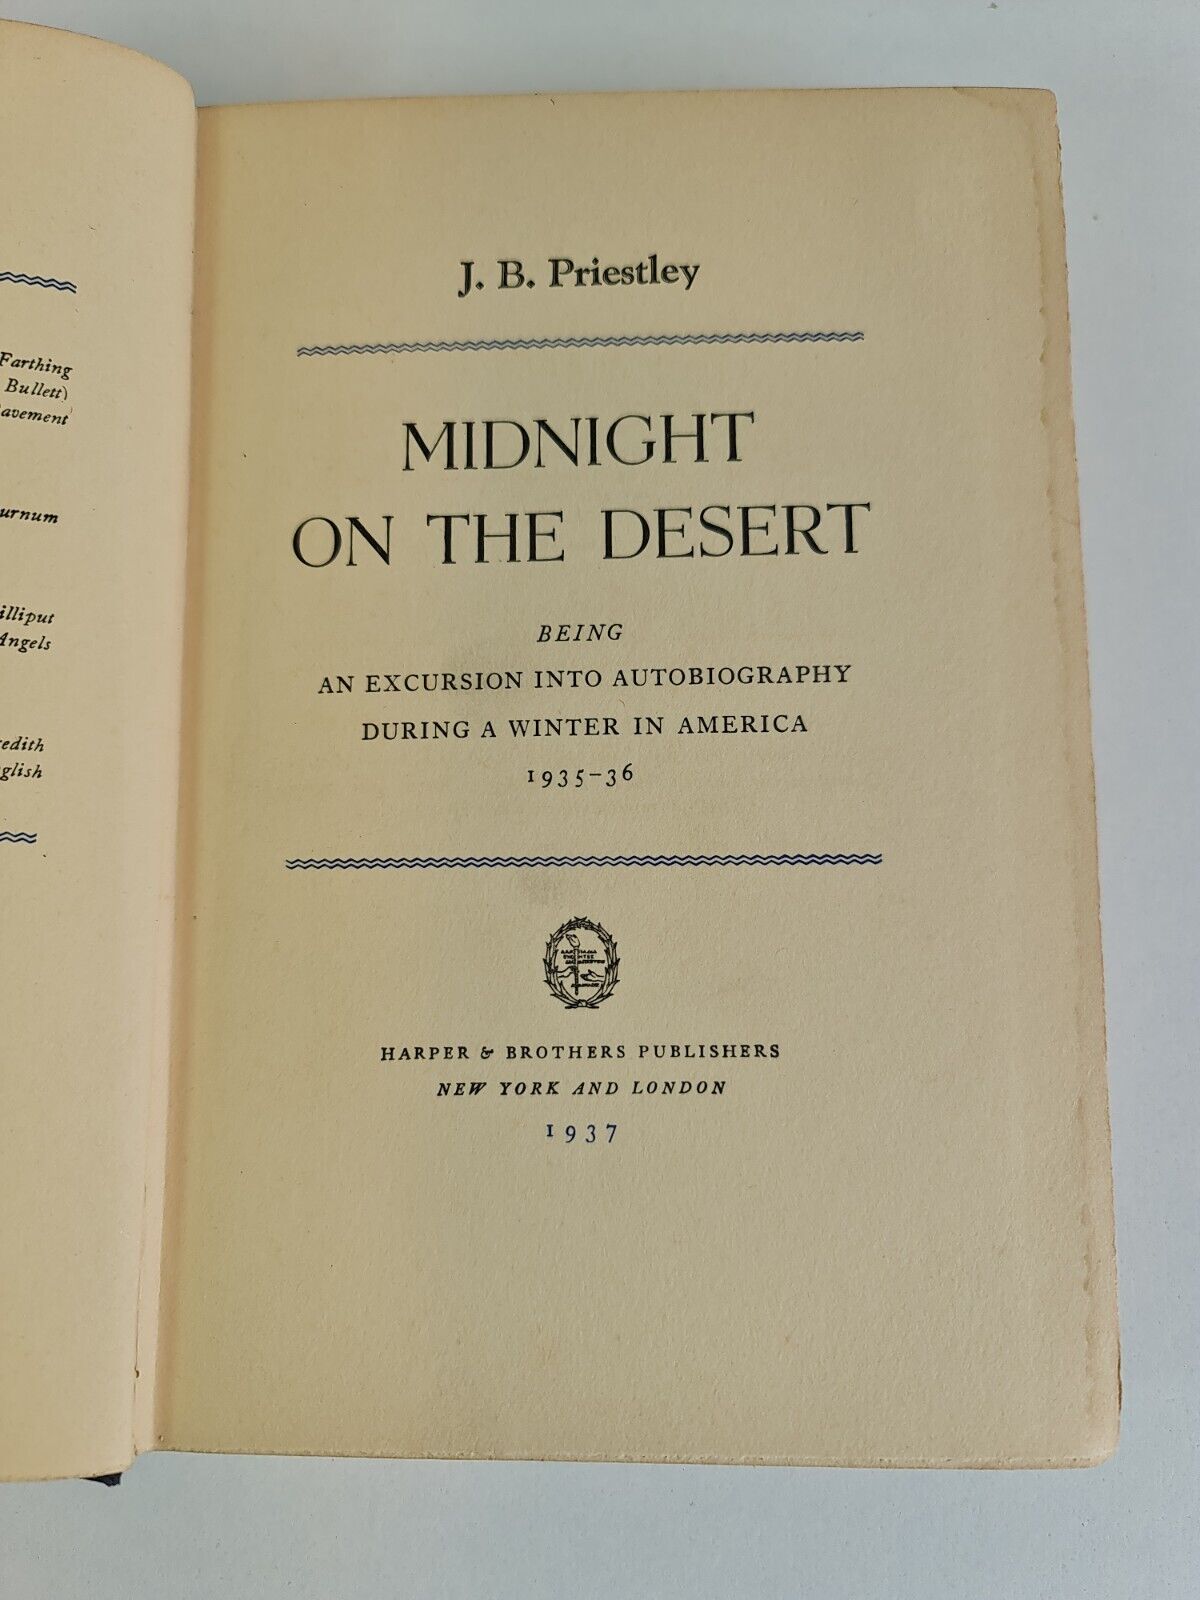 Midnight on the Desert by J. B. Priestley (1937 -1st American Edition)